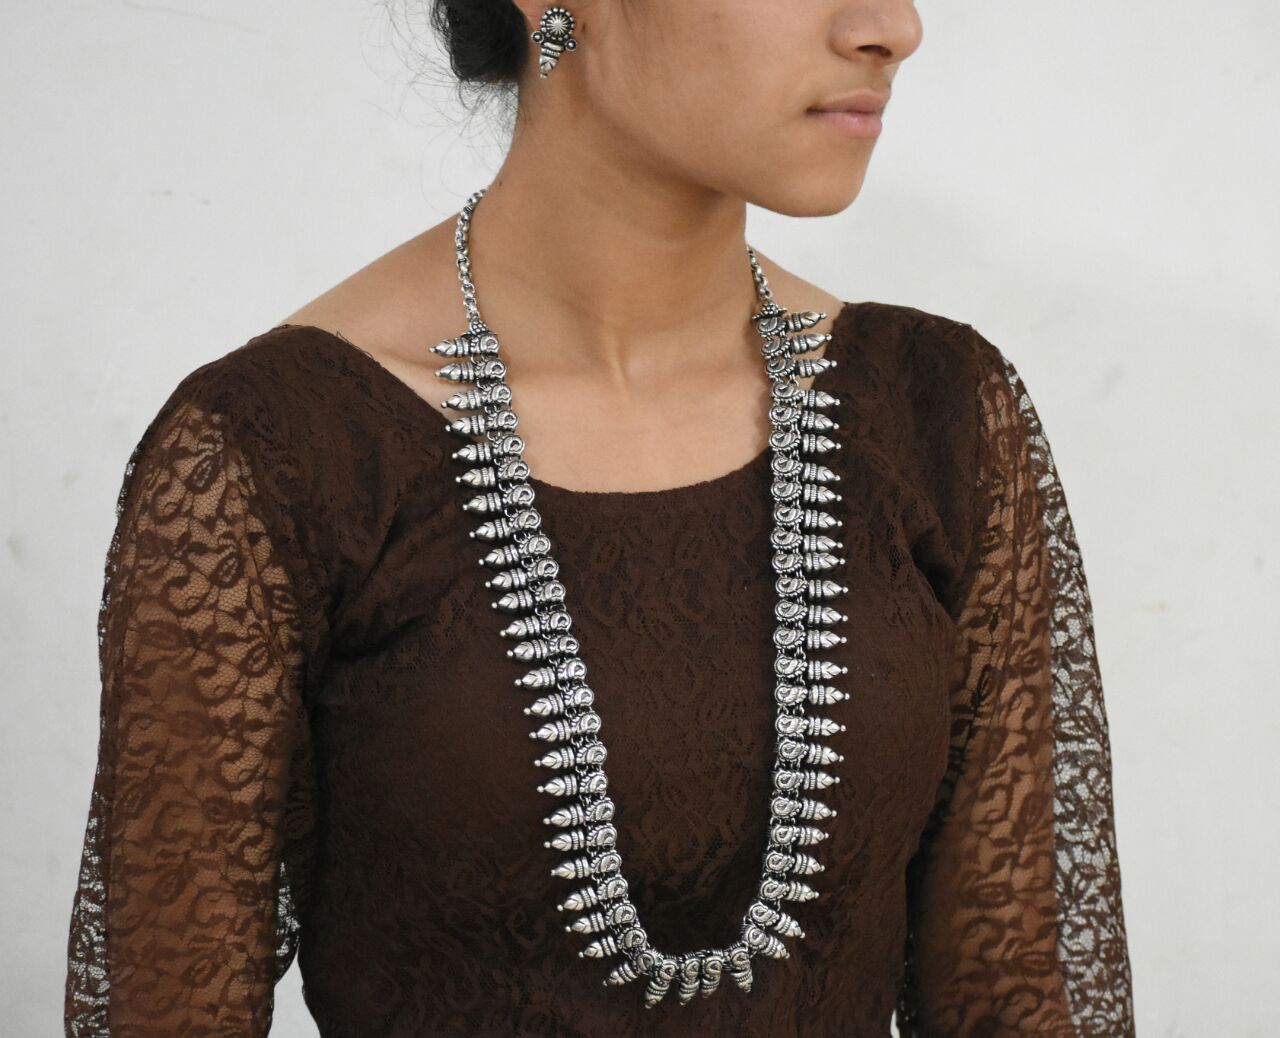 Oxidized Kolhapuri Necklace and Earrings-OKN004